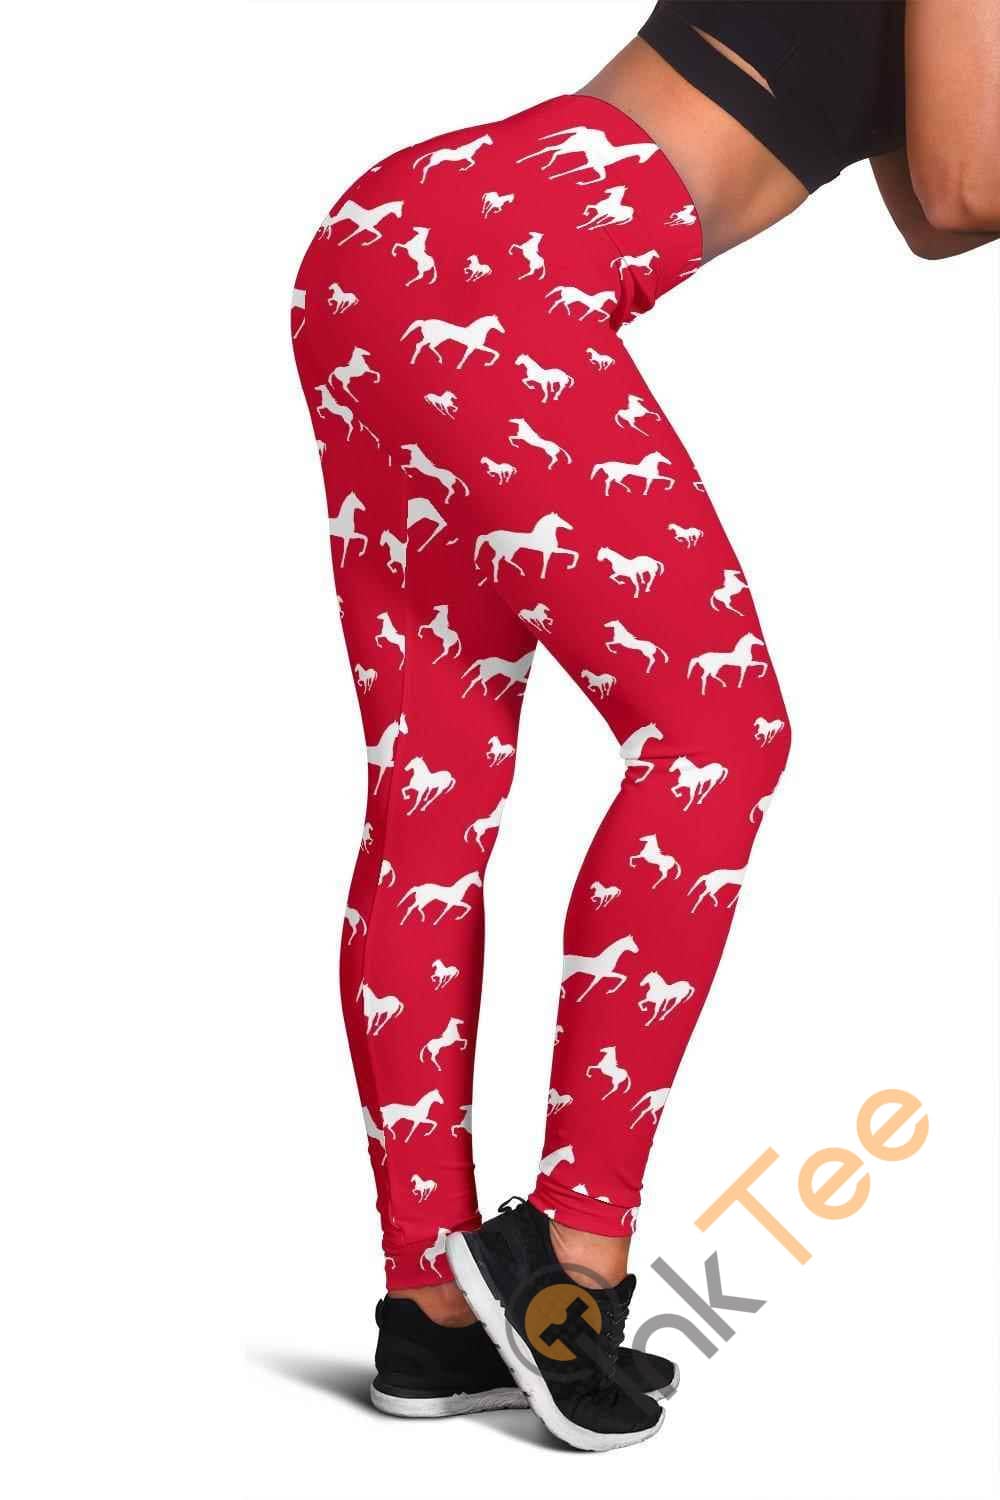 Inktee Store - Red Horse 3D All Over Print For Yoga Fitness Women'S Leggings Image